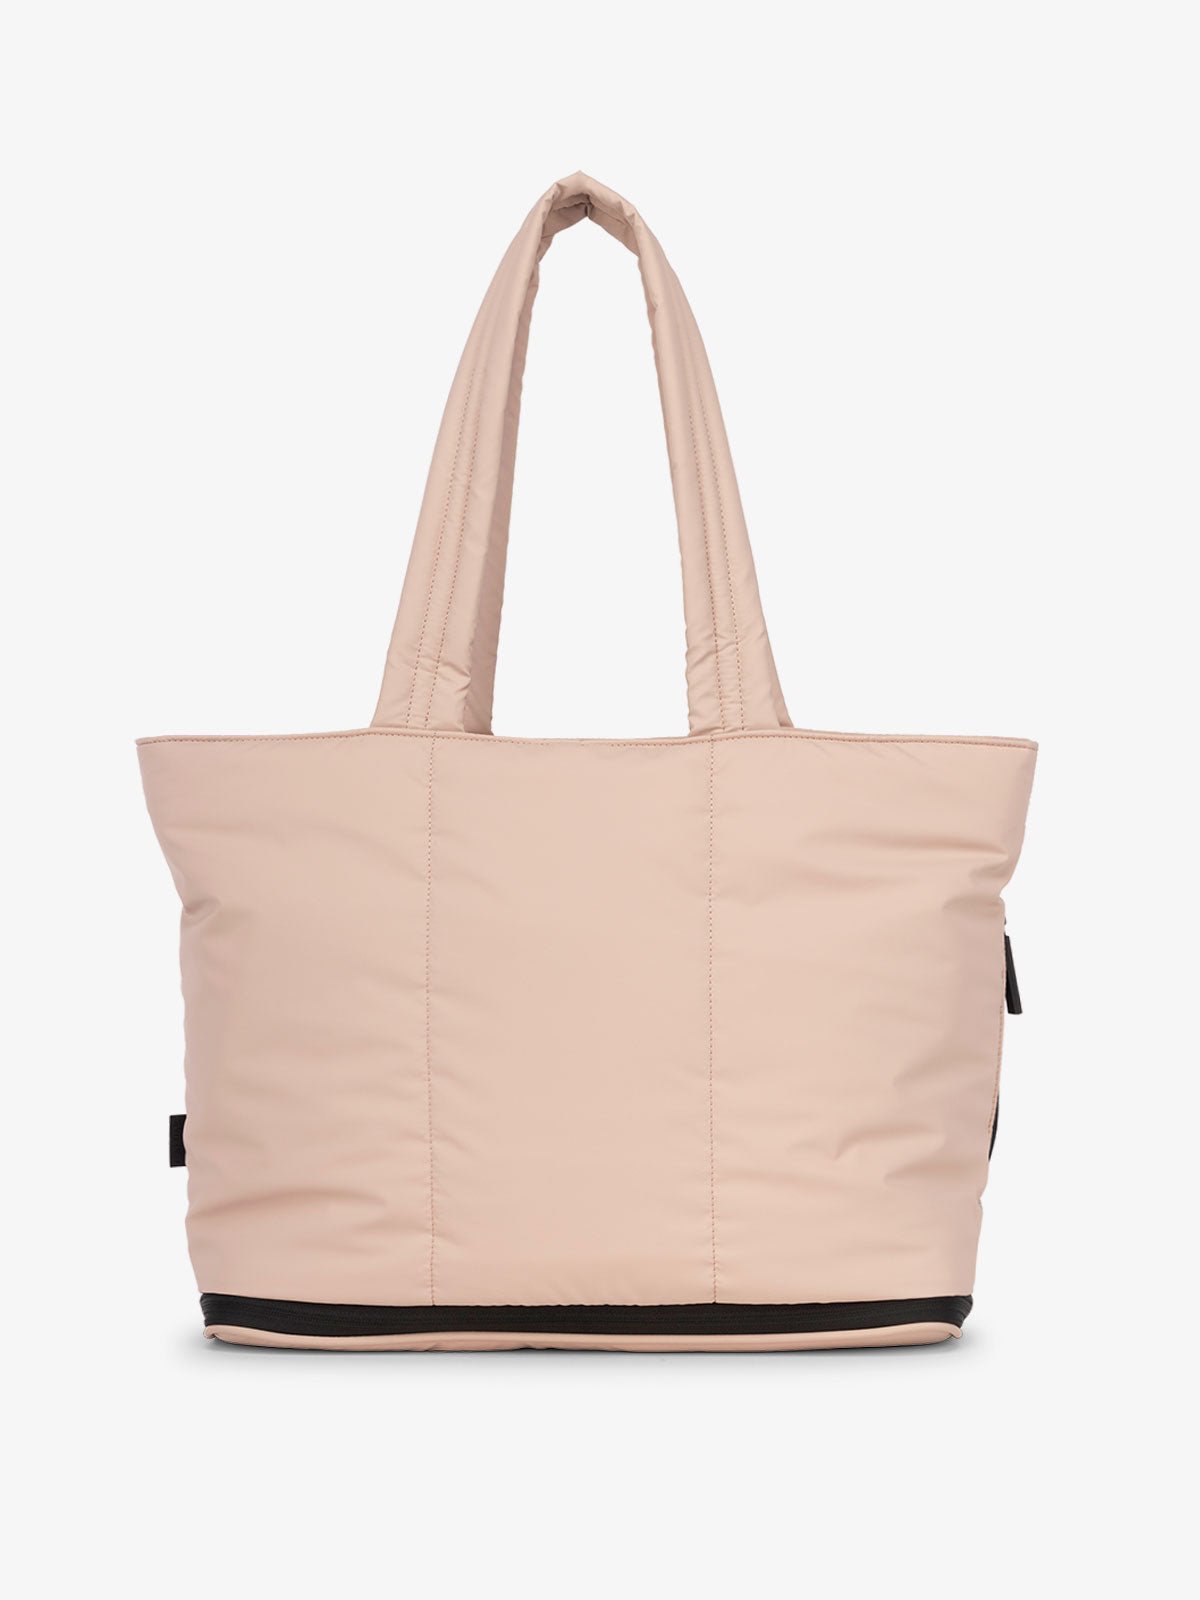 CALPAK Luka expandable laptop tote bag in light pink